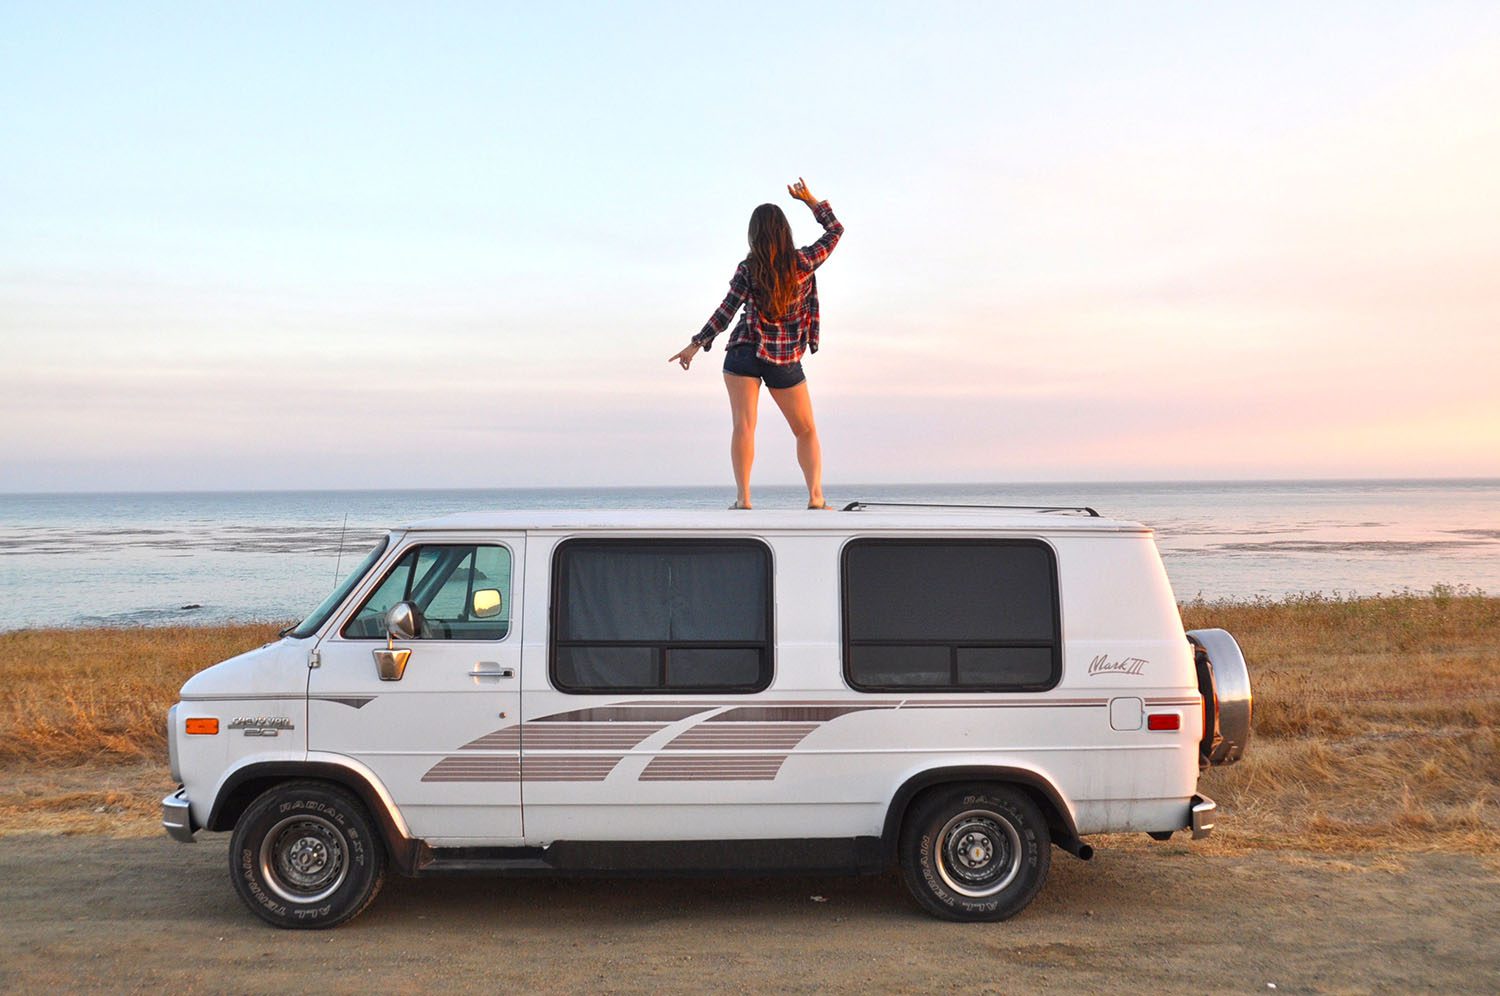 Ocean Mountain Sun Wave Beach PNW West Coast Truck Van Car Vinyl Decal Sticker 